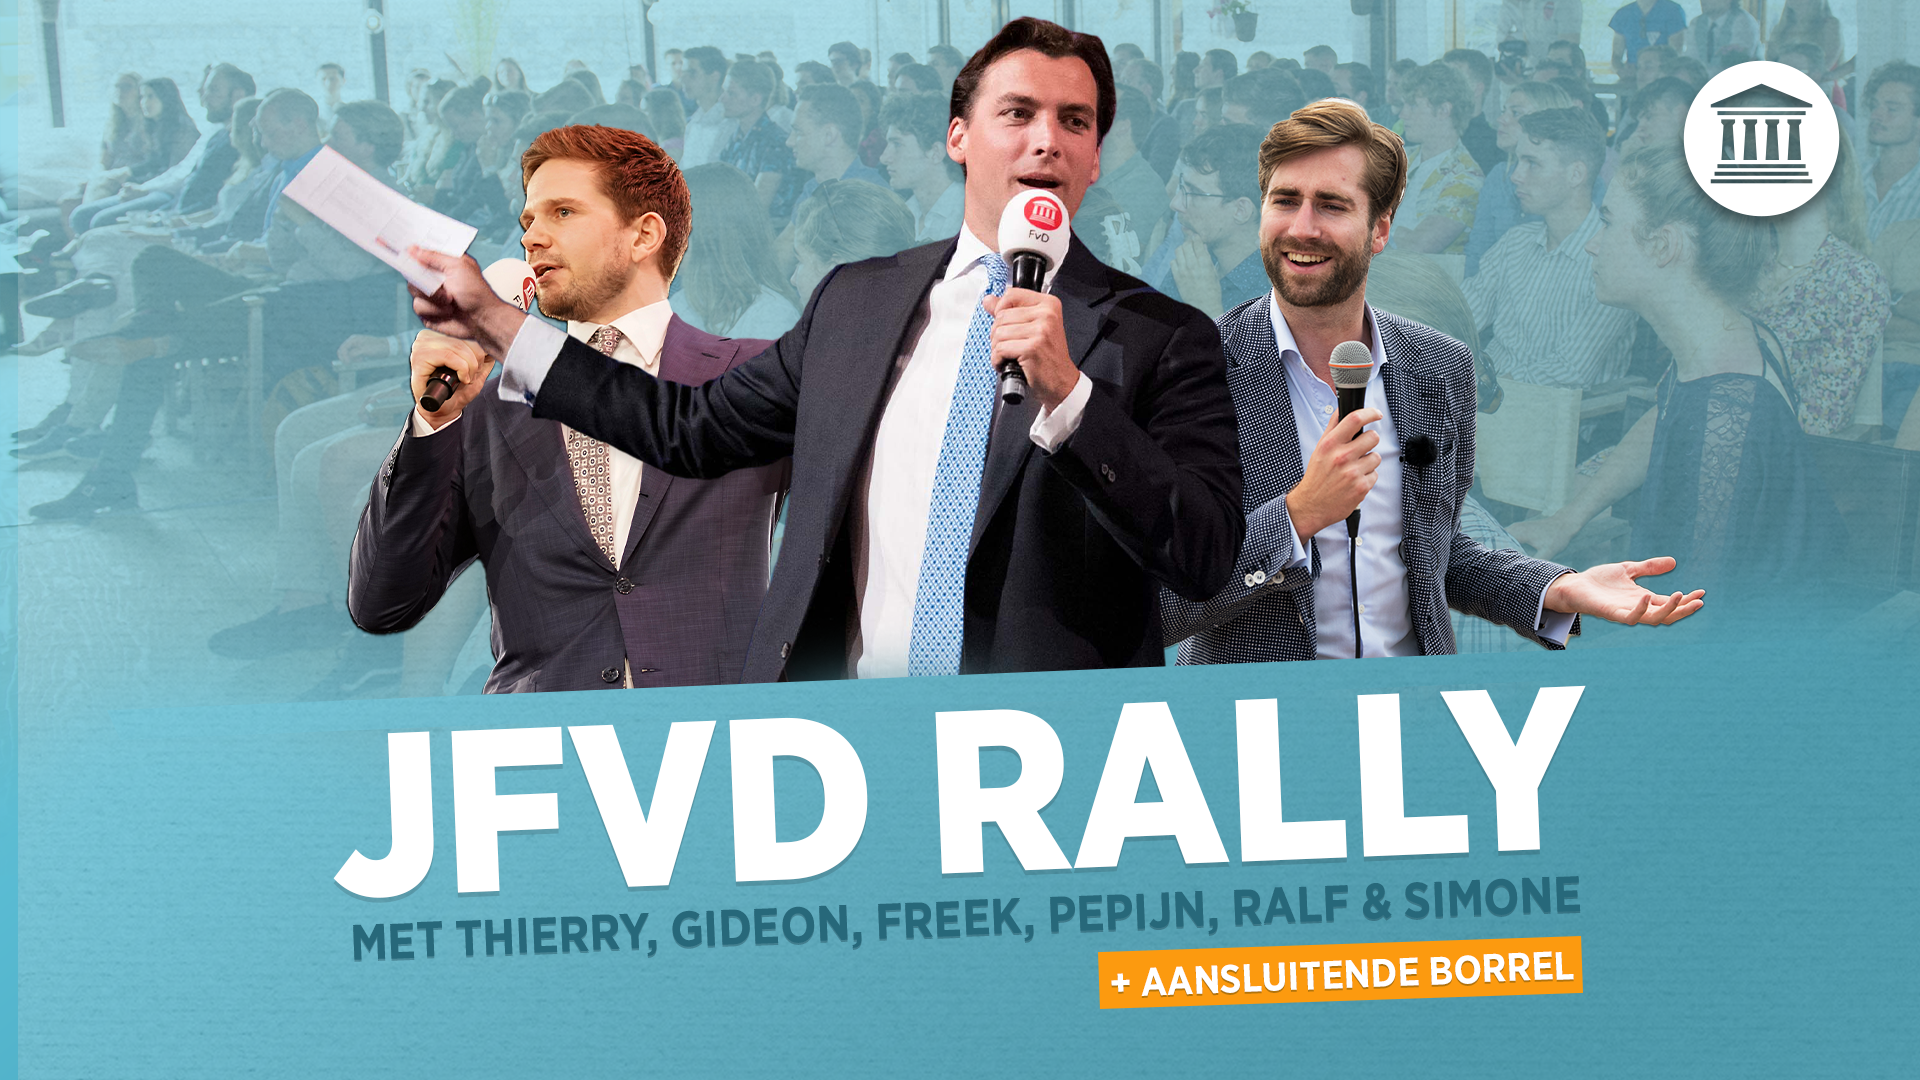 JFVD Rally